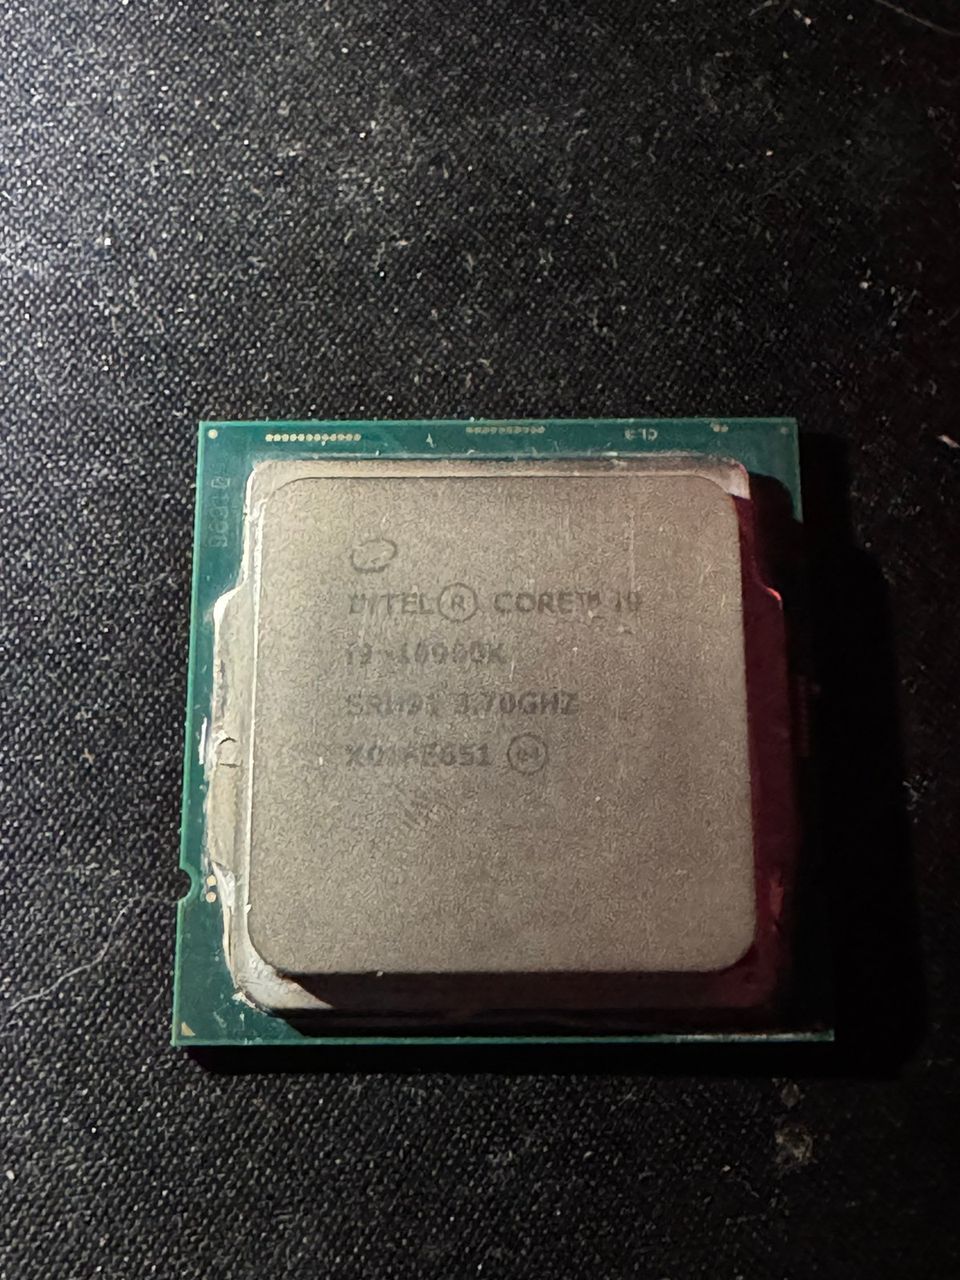 Intel I9 10900k